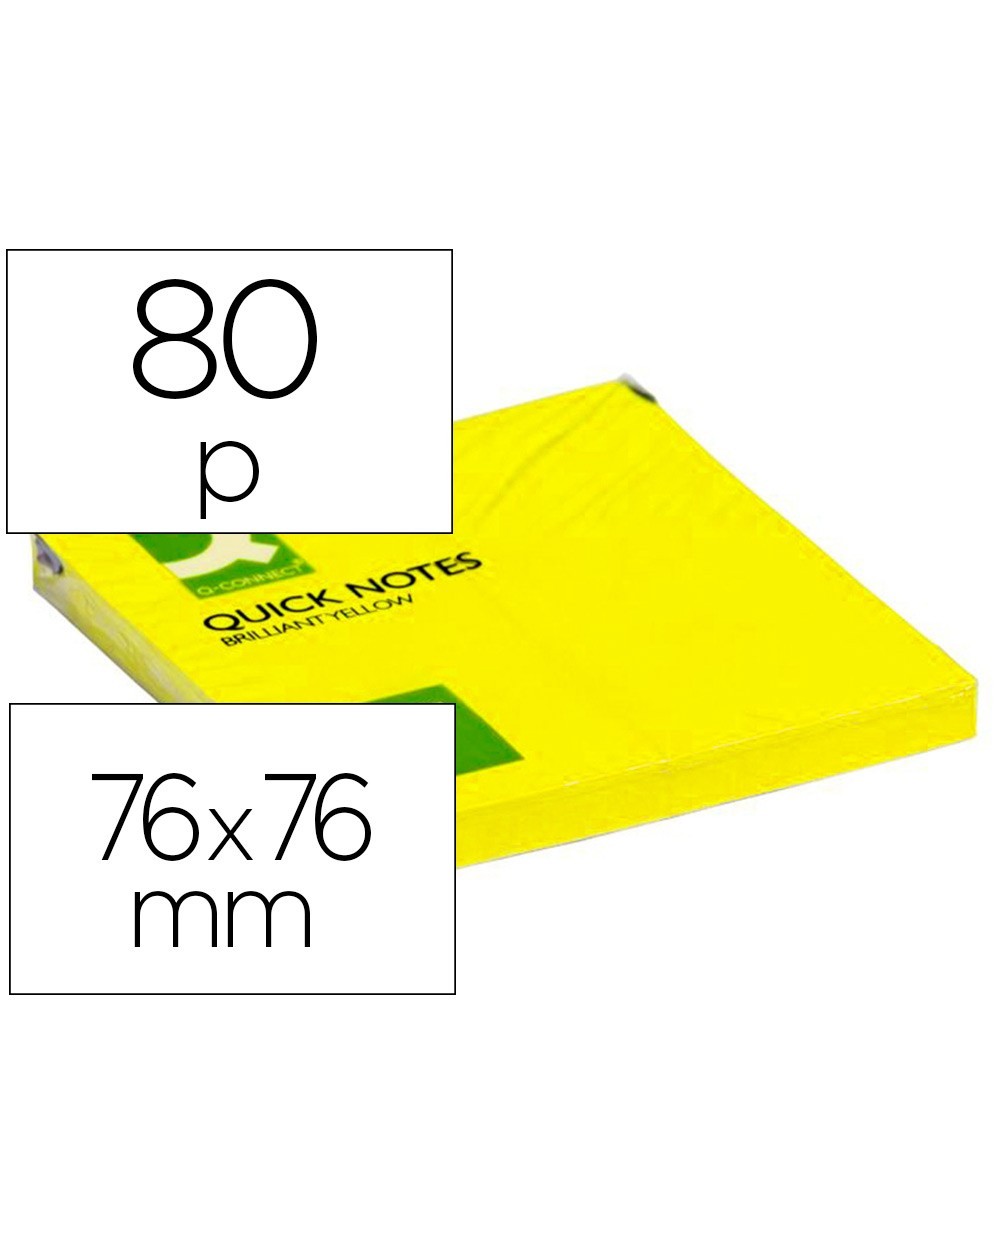 Bloc de notas adhesivas quita y pon q connect 76x76 mm amarillo neon 80 hojas